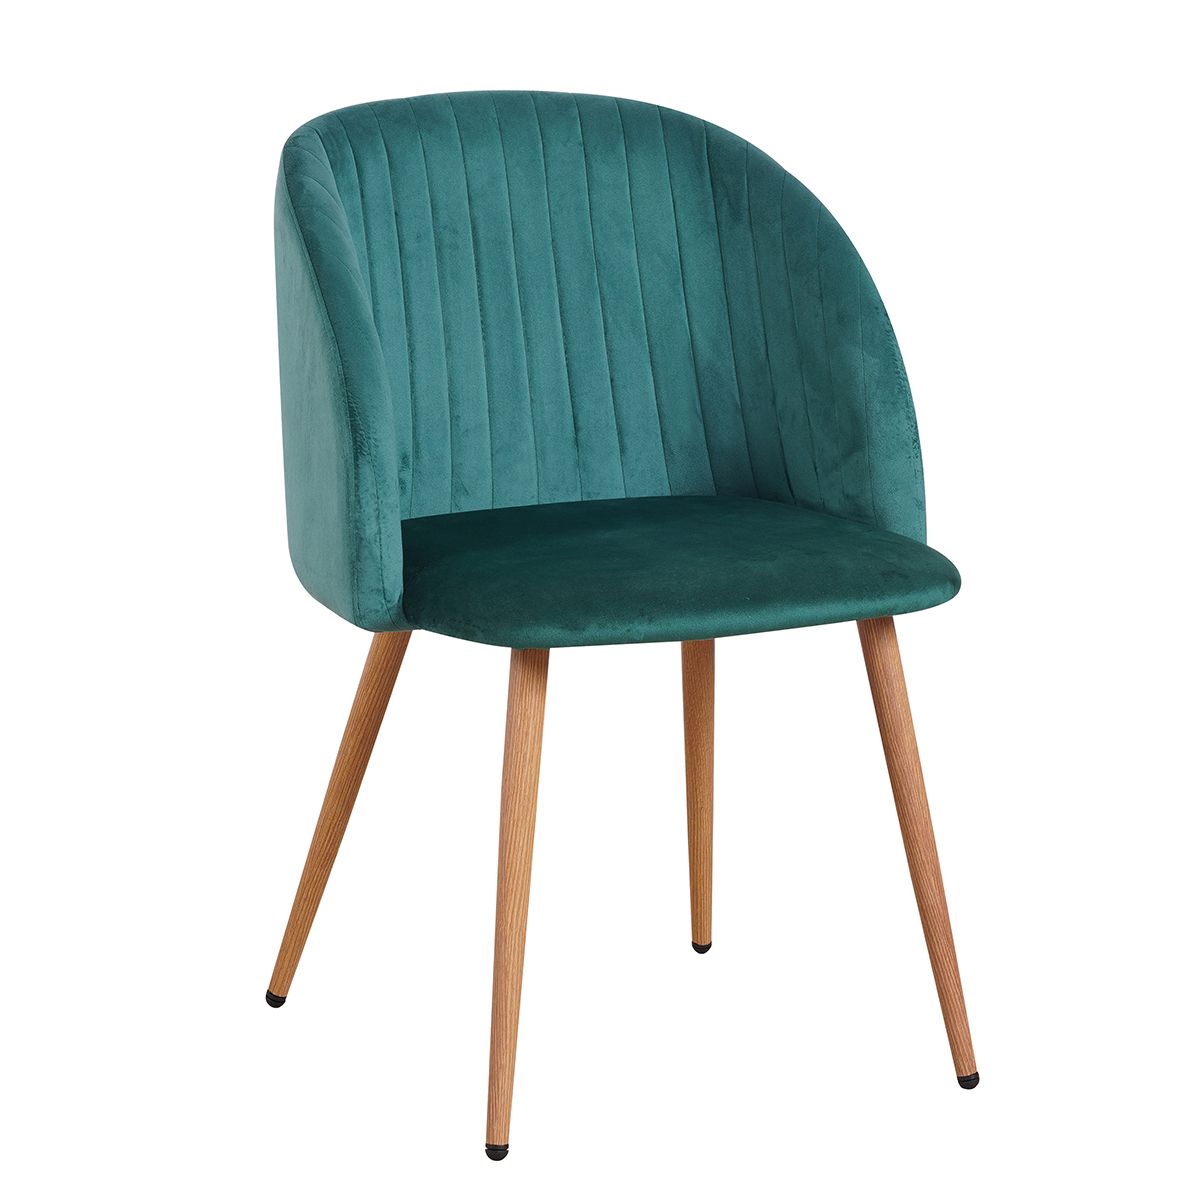 Artelibre Καρέκλα ArteLibre KINGFISHER Πράσινο Ύφασμα/Μέταλλο 54x55x83cm